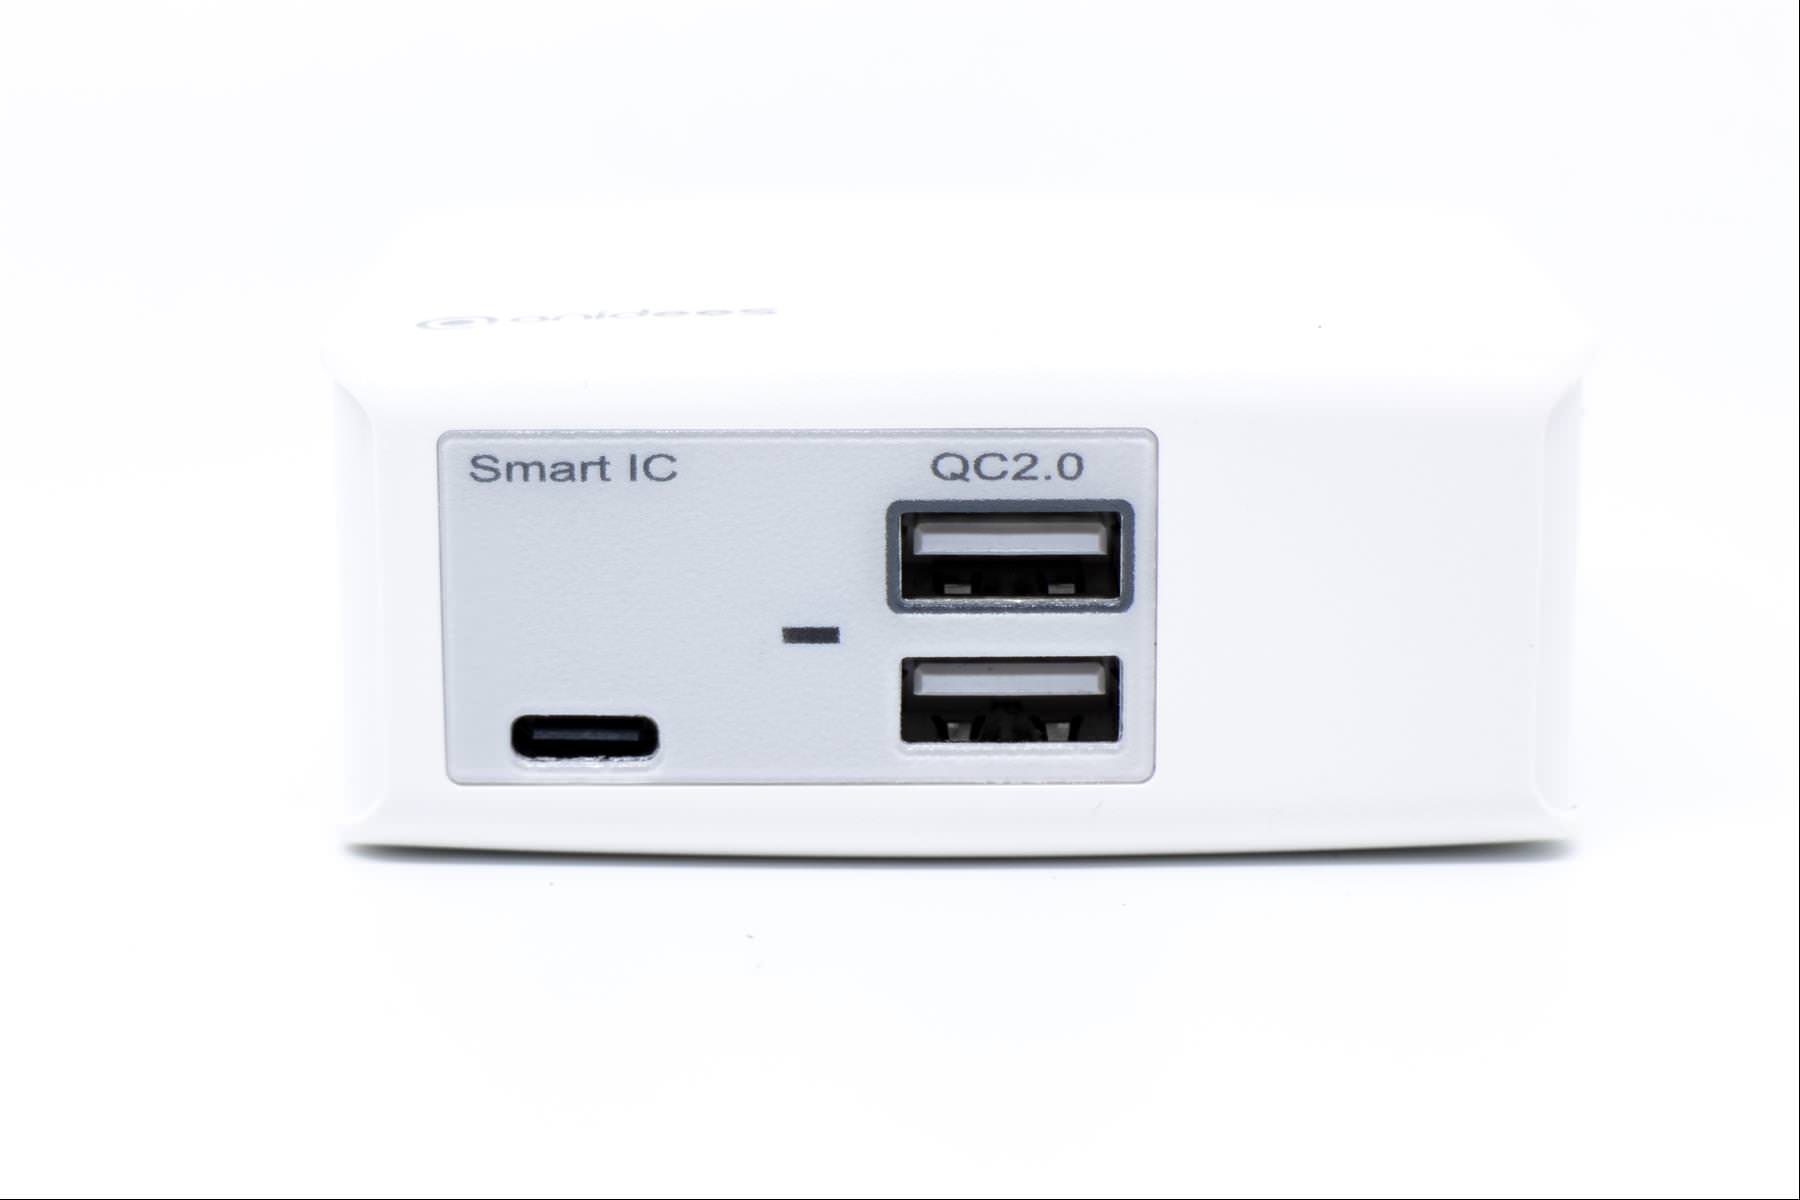 [3C 開箱] 安億迪 Type-C,QC2.0 AI-Charger 3C +萬國轉接頭 USB充電器